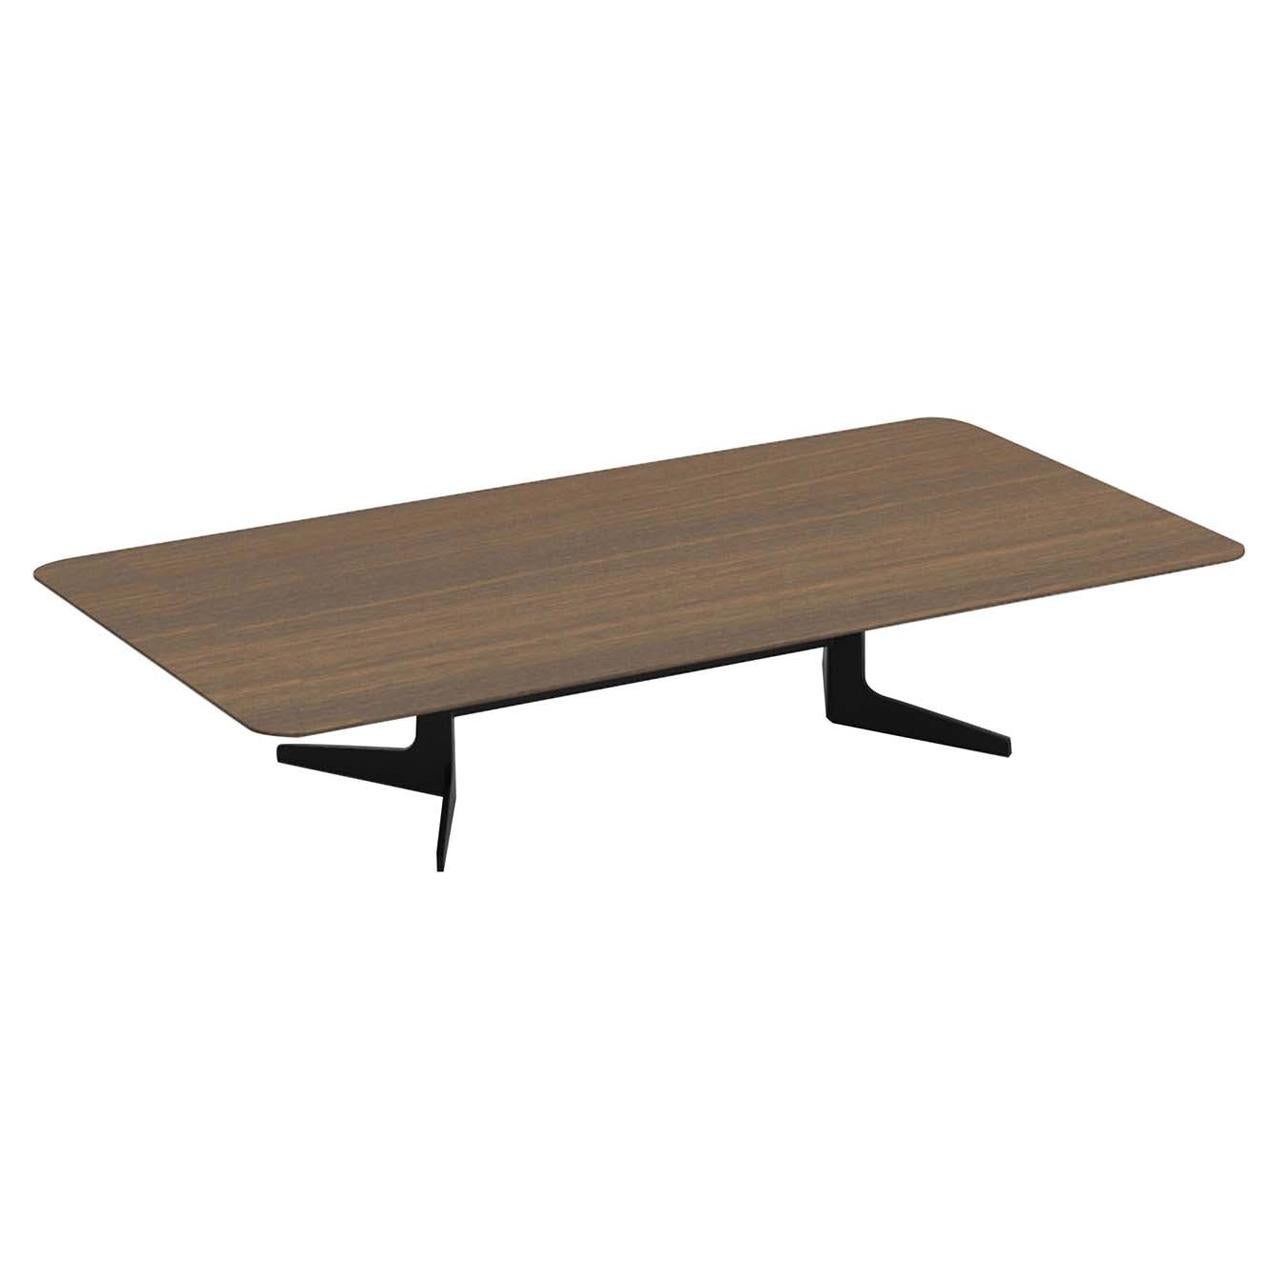 Blake Rectangular Coffee Table with Oak Wood Top